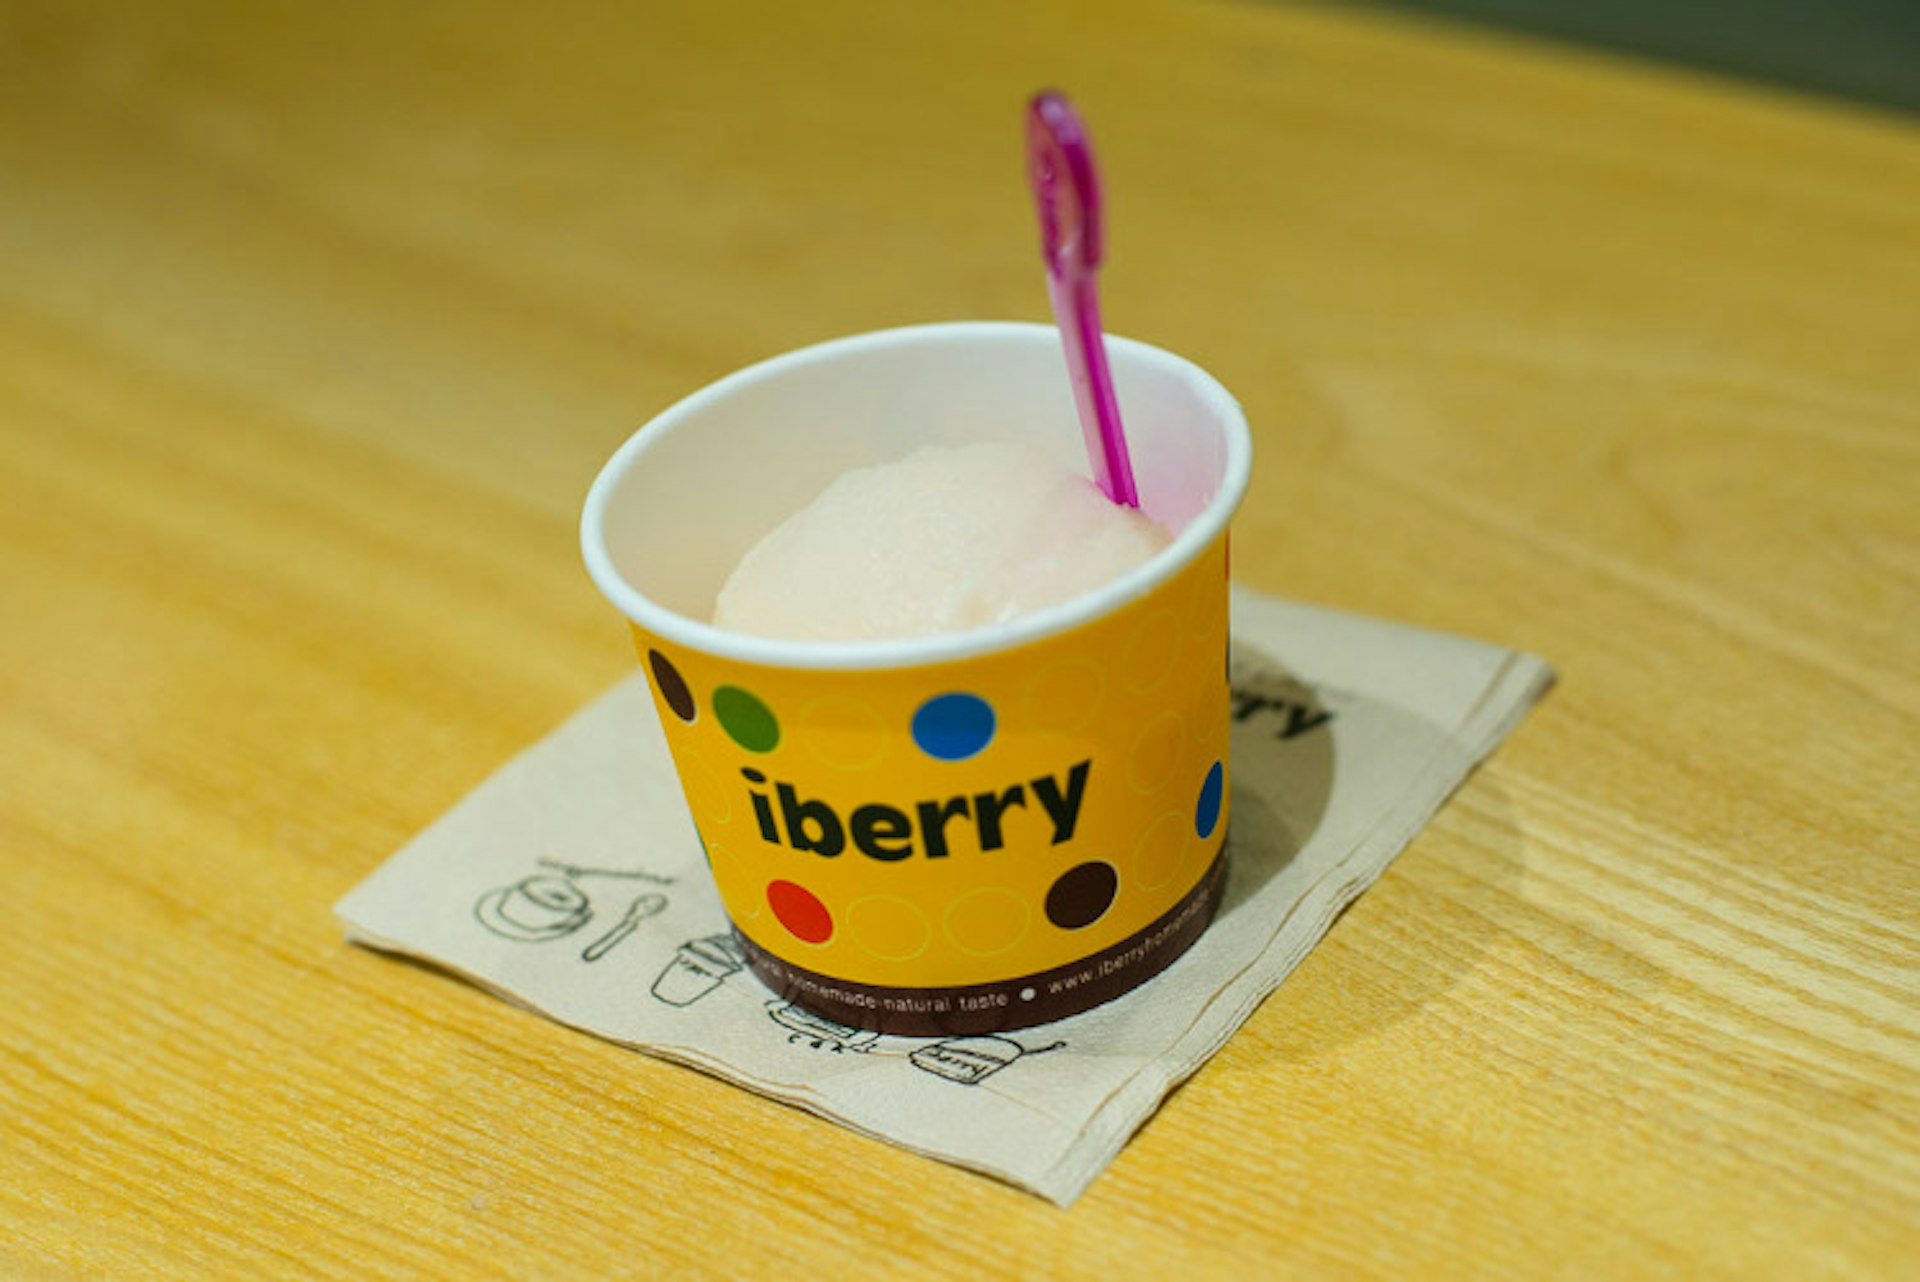 Tropical fruit-flavoured ice cream at iberry, Bangkok. Image by Austin Bush